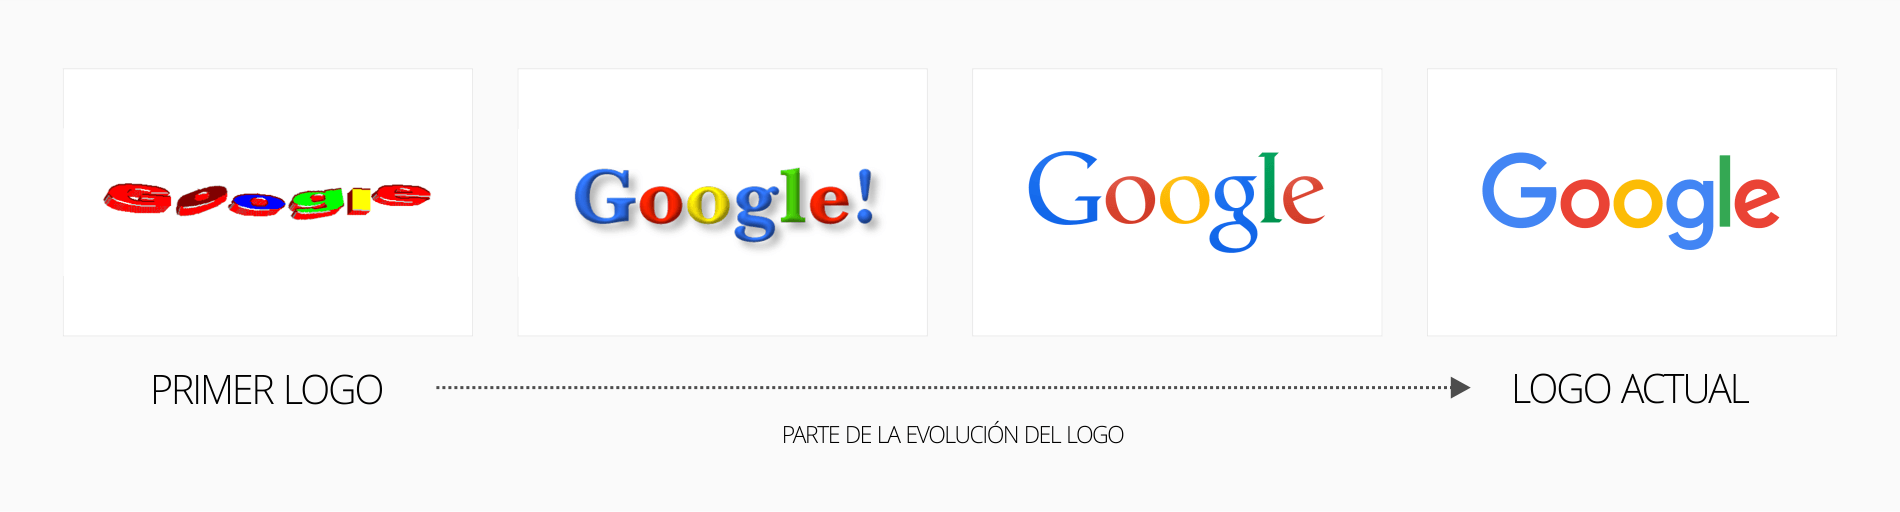 evolucion logotipo google